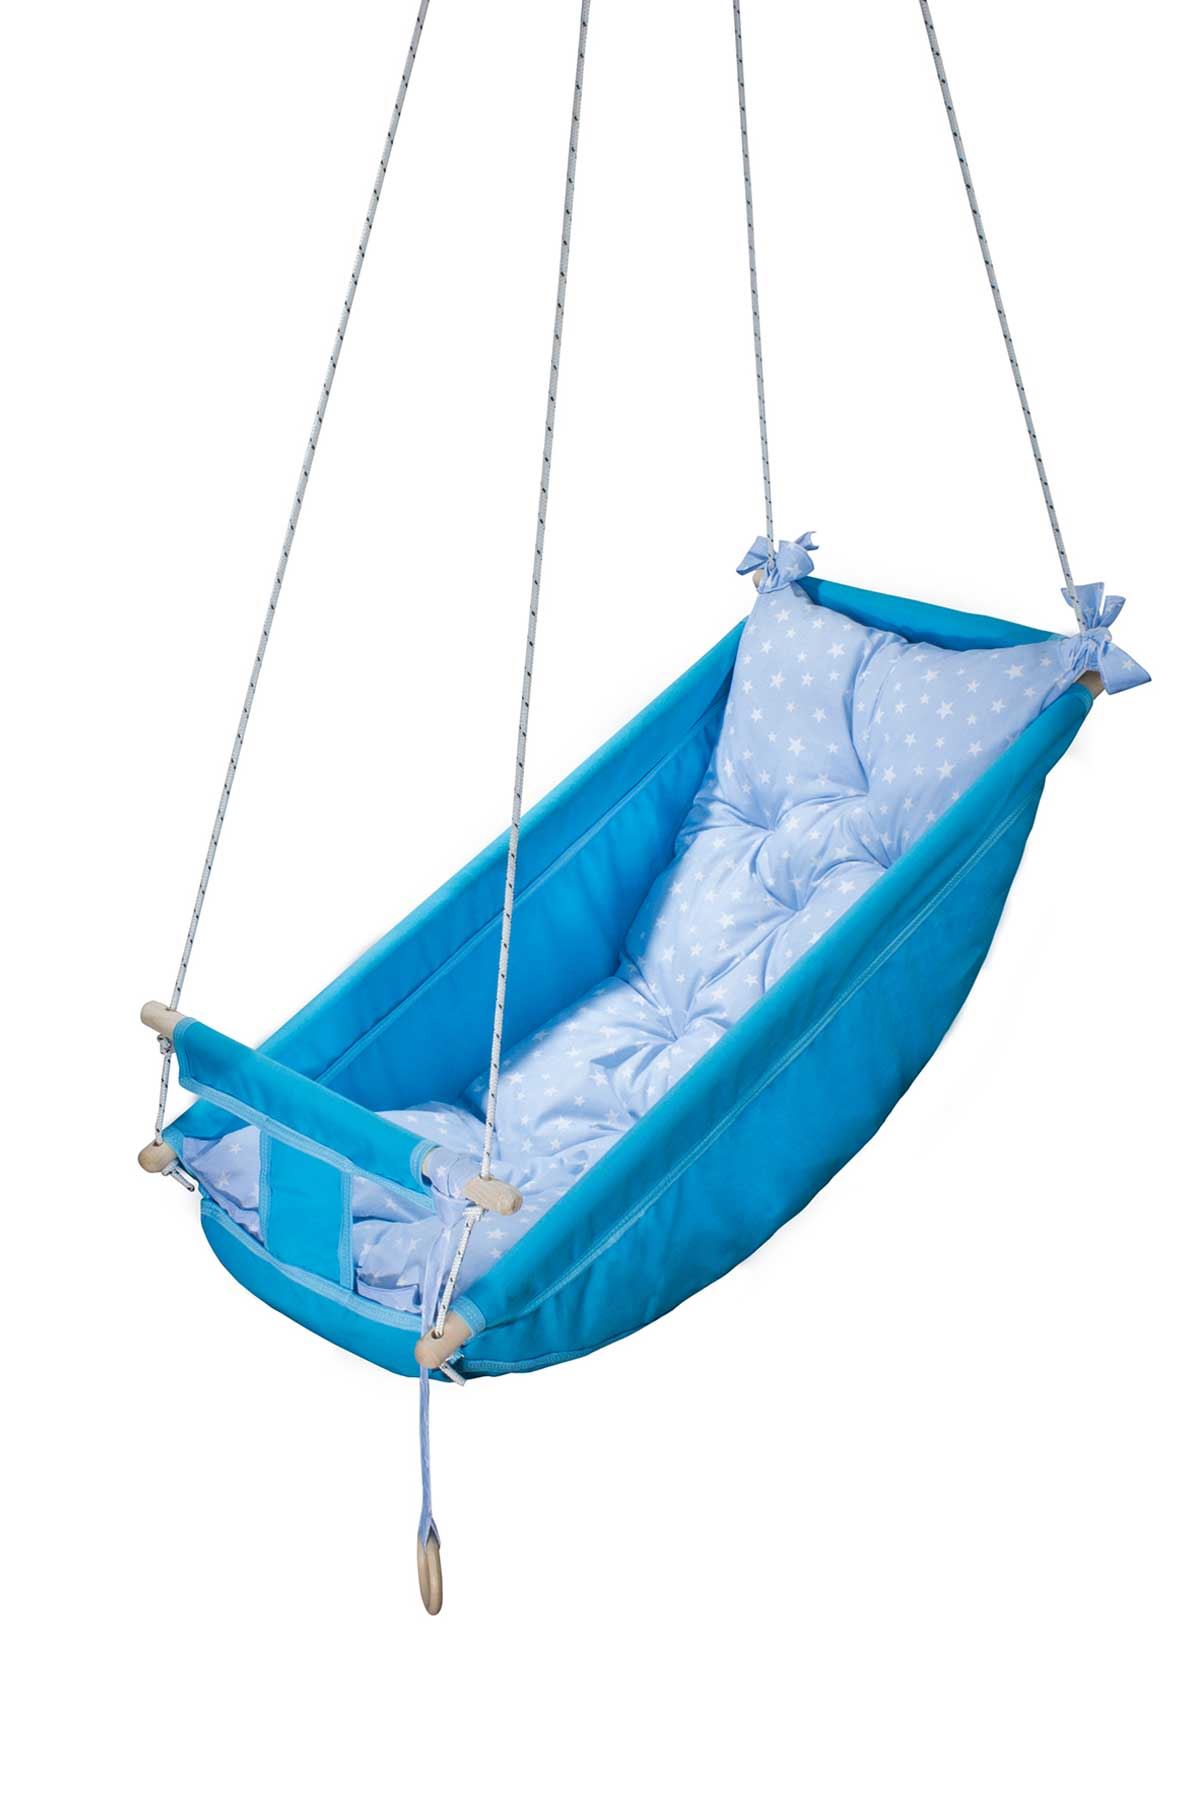 Blue Bundera Kids Baby Sleeping Swing Wooden Hammock Cradle Swing